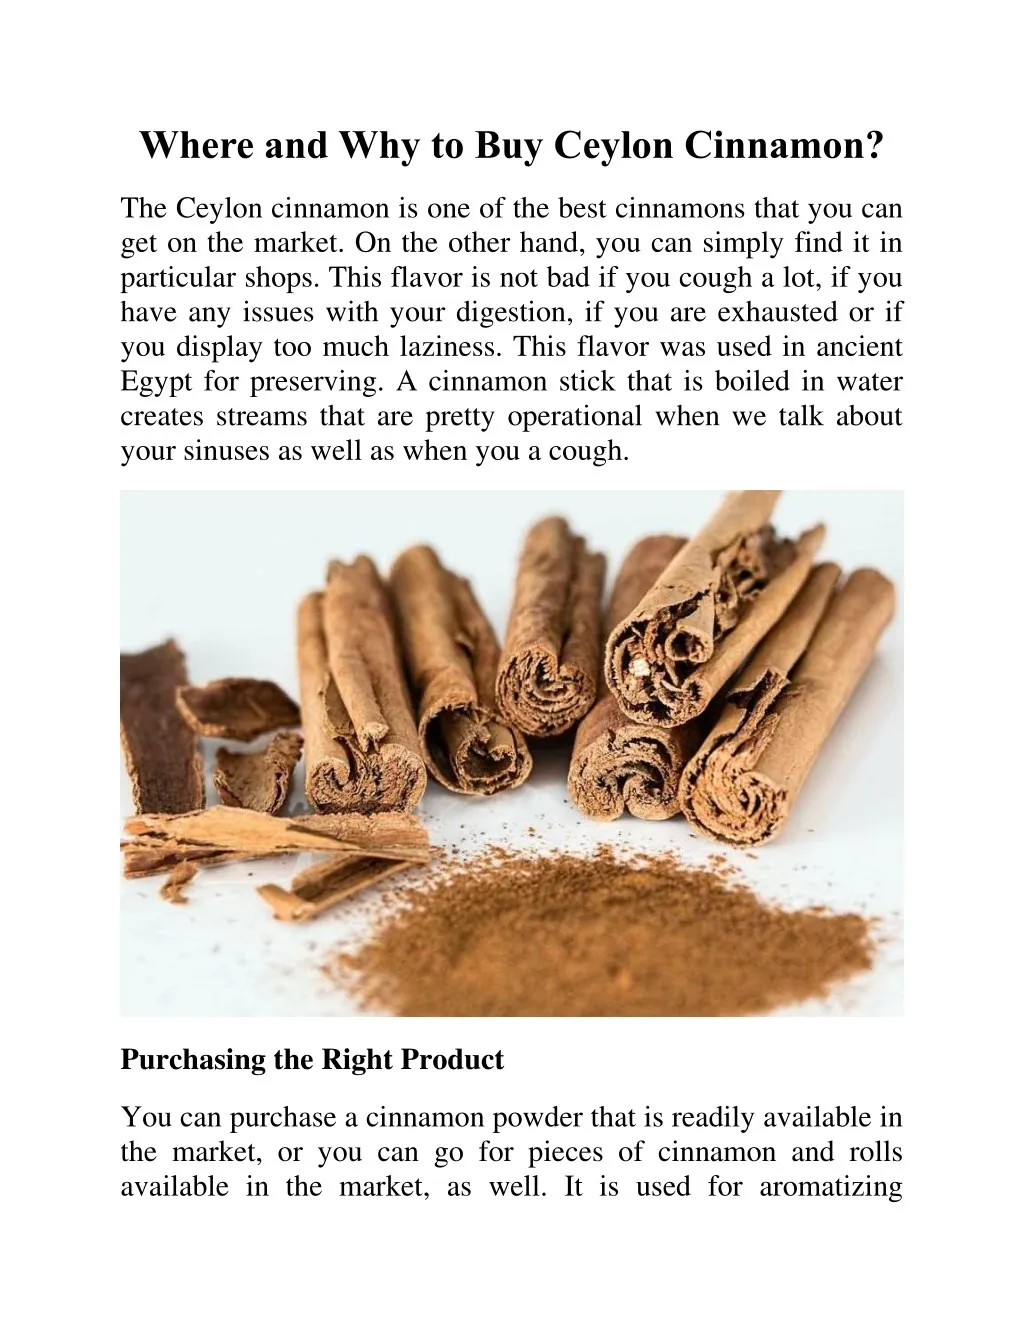 where and why to buy ceylon cinnamon